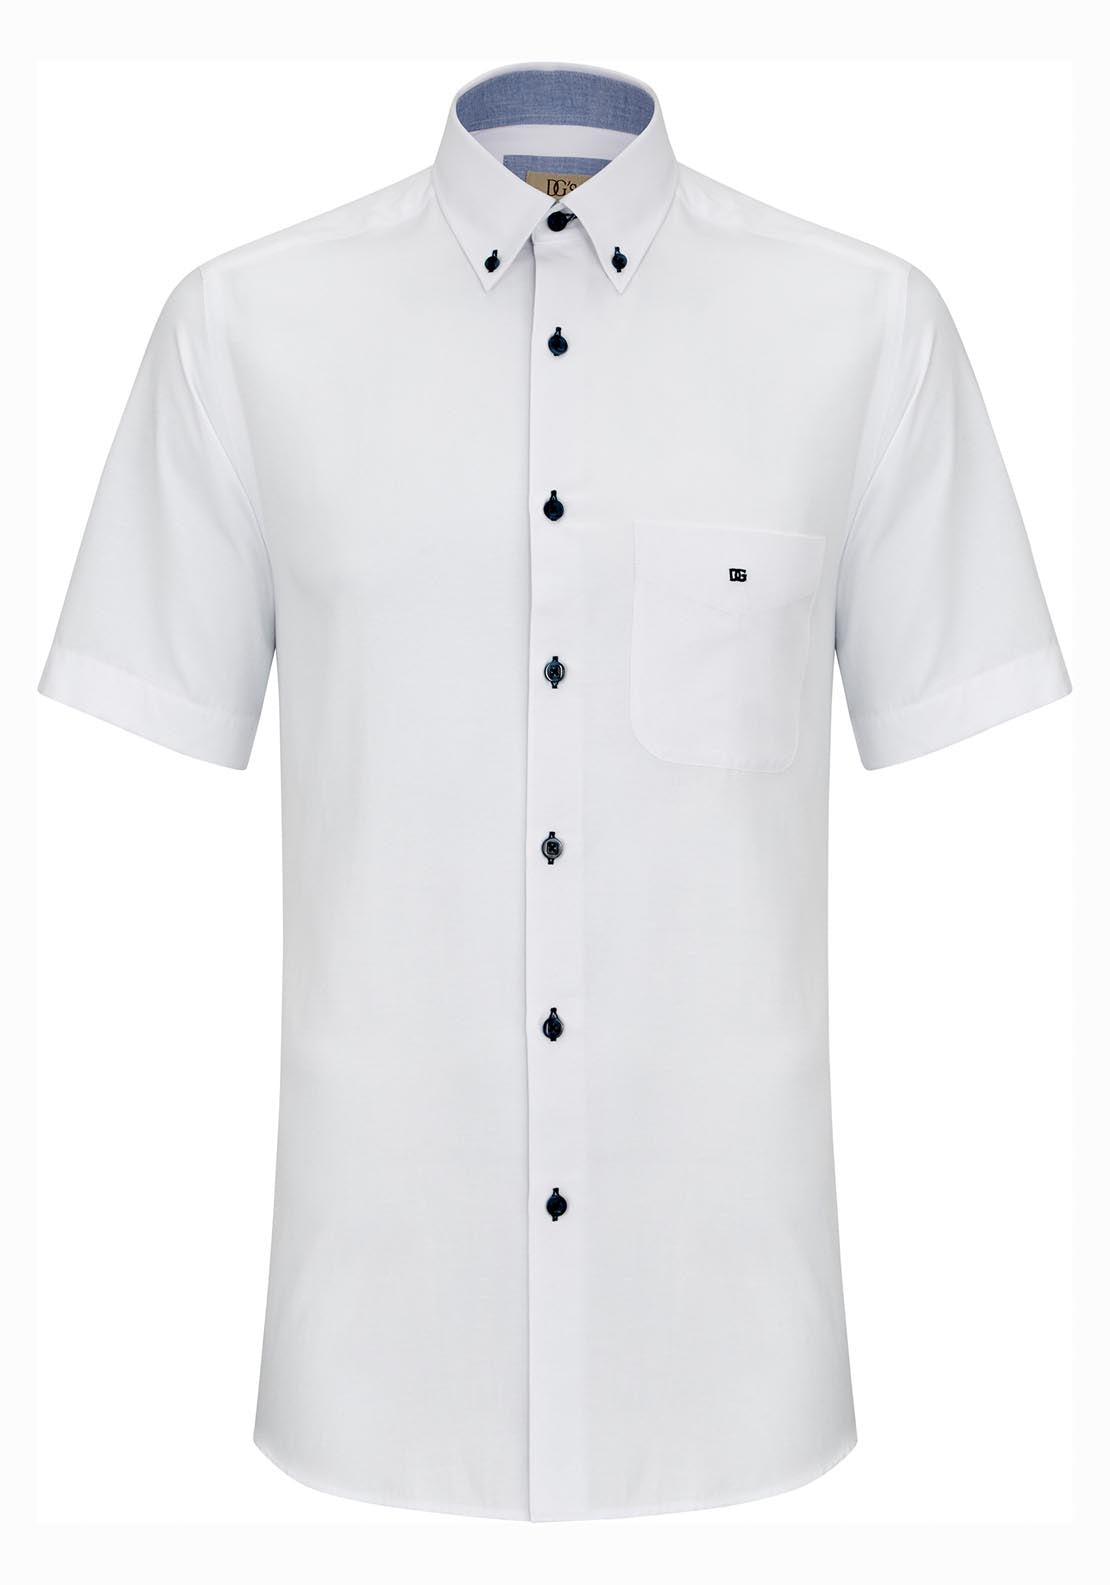 Drifter Short Sleeve Plain Shirt - White 1 Shaws Department Stores